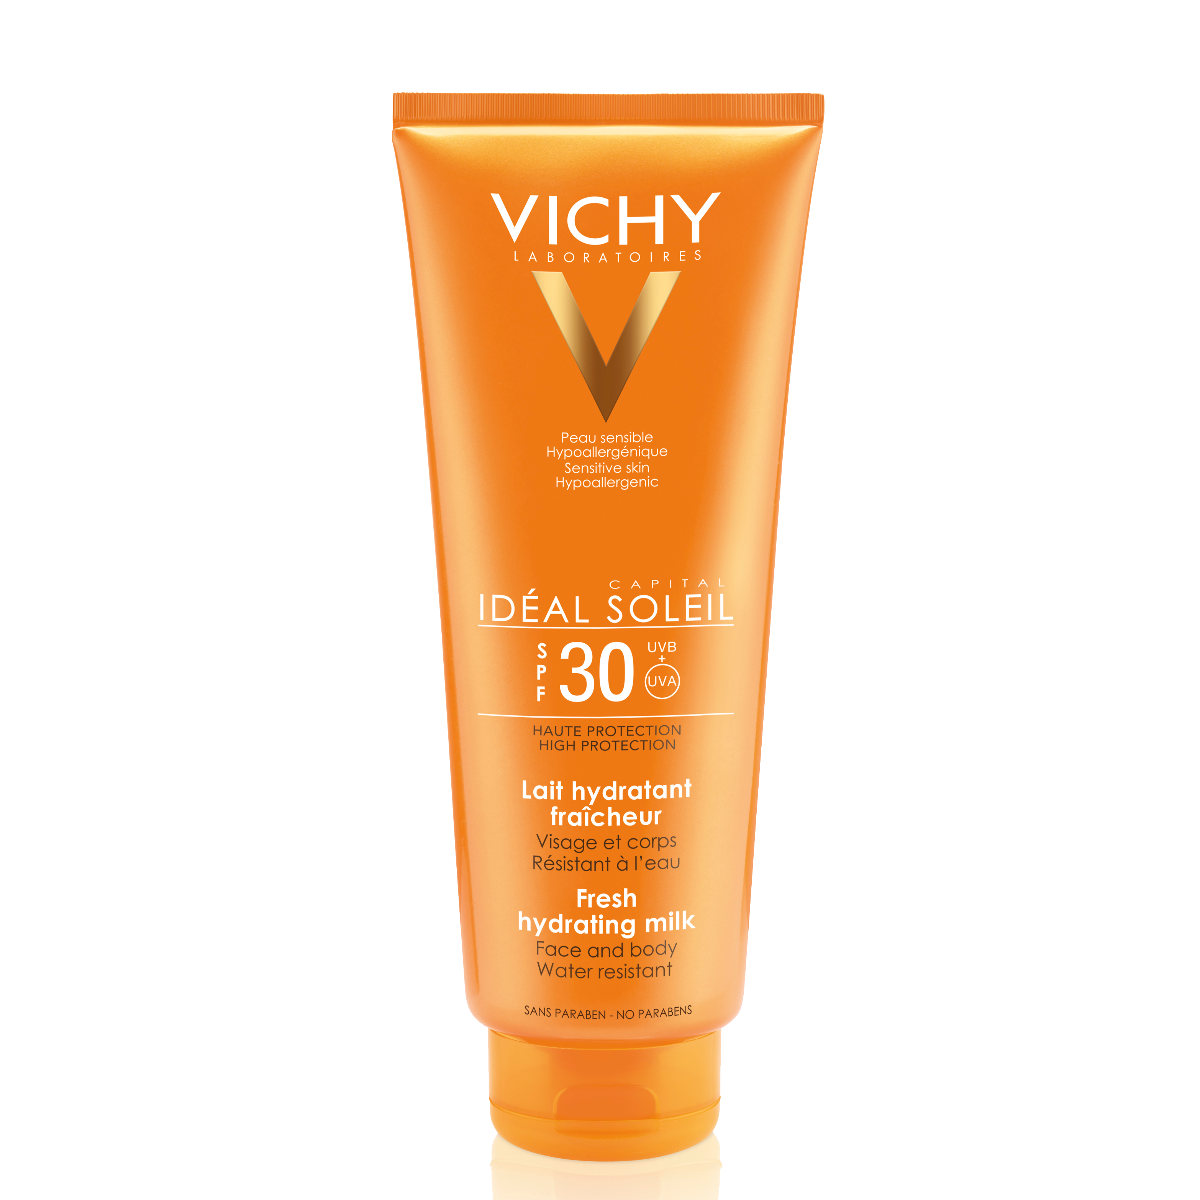 Vichy Ideal Soleil Face & Body Milk SPF 30 300 ml